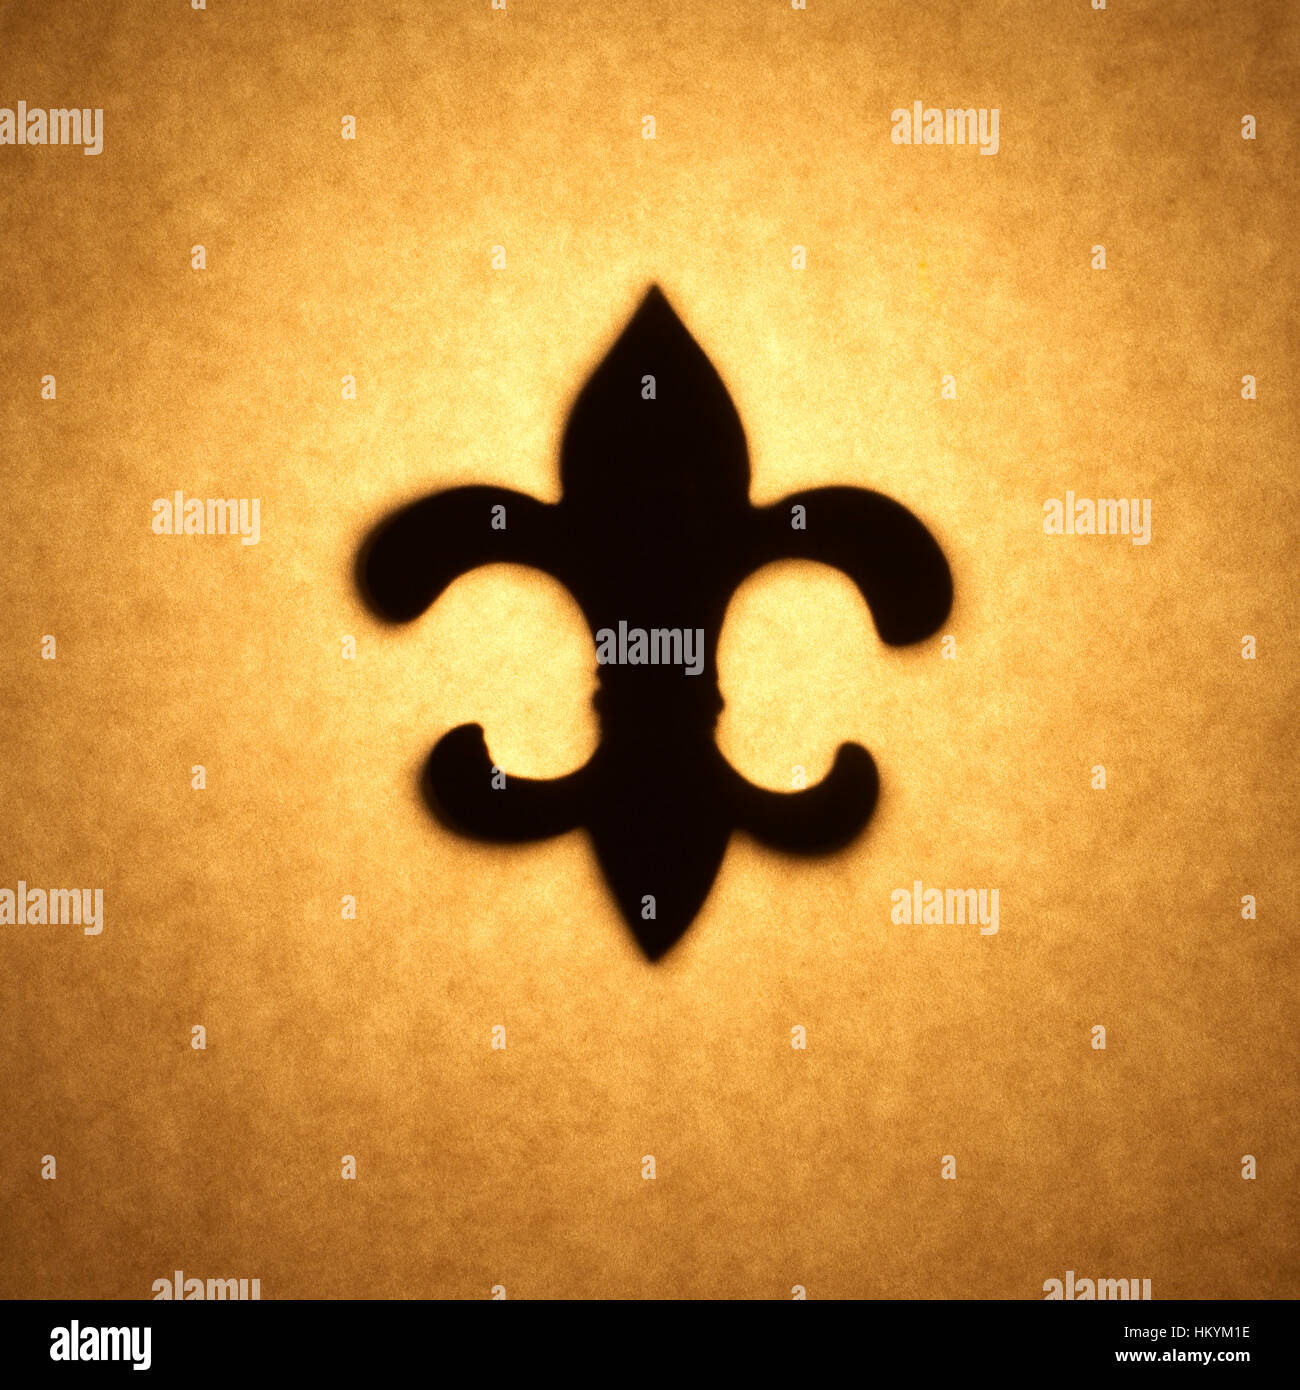 Beleuchtete Silhouette des Fleur Form ausgeschnitten gegen Braunton Papier mit spot-Highlight. Stockfoto